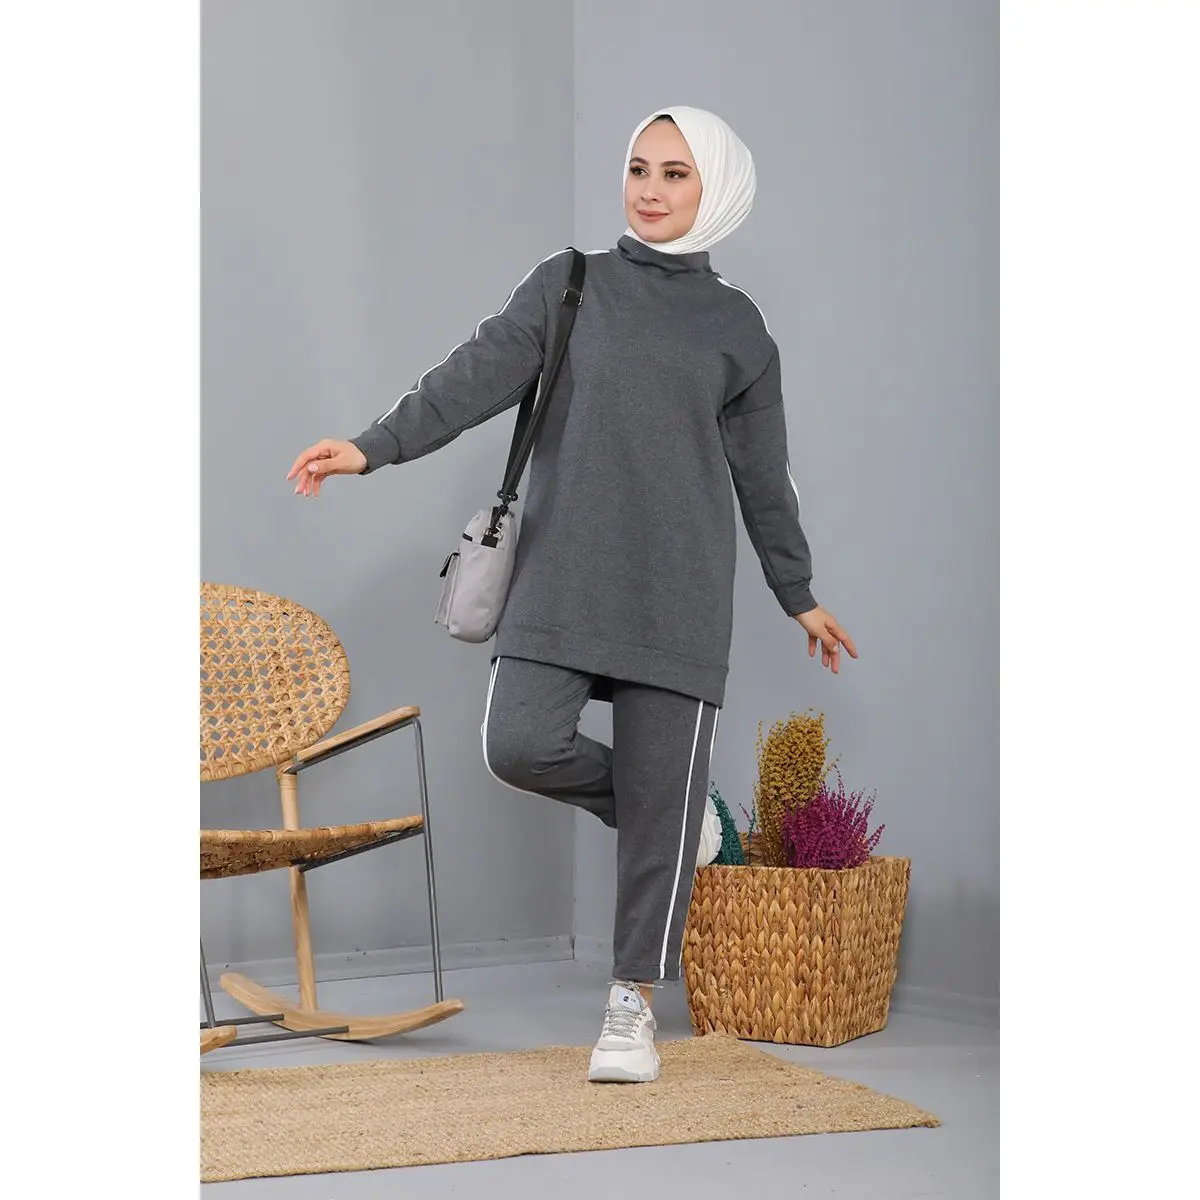 Sports Double Muslim Set Muslim Fashion Double Hijab Suit Young Muslim Fashion Muslim Women Sport  Clothing 2021 new Fashion